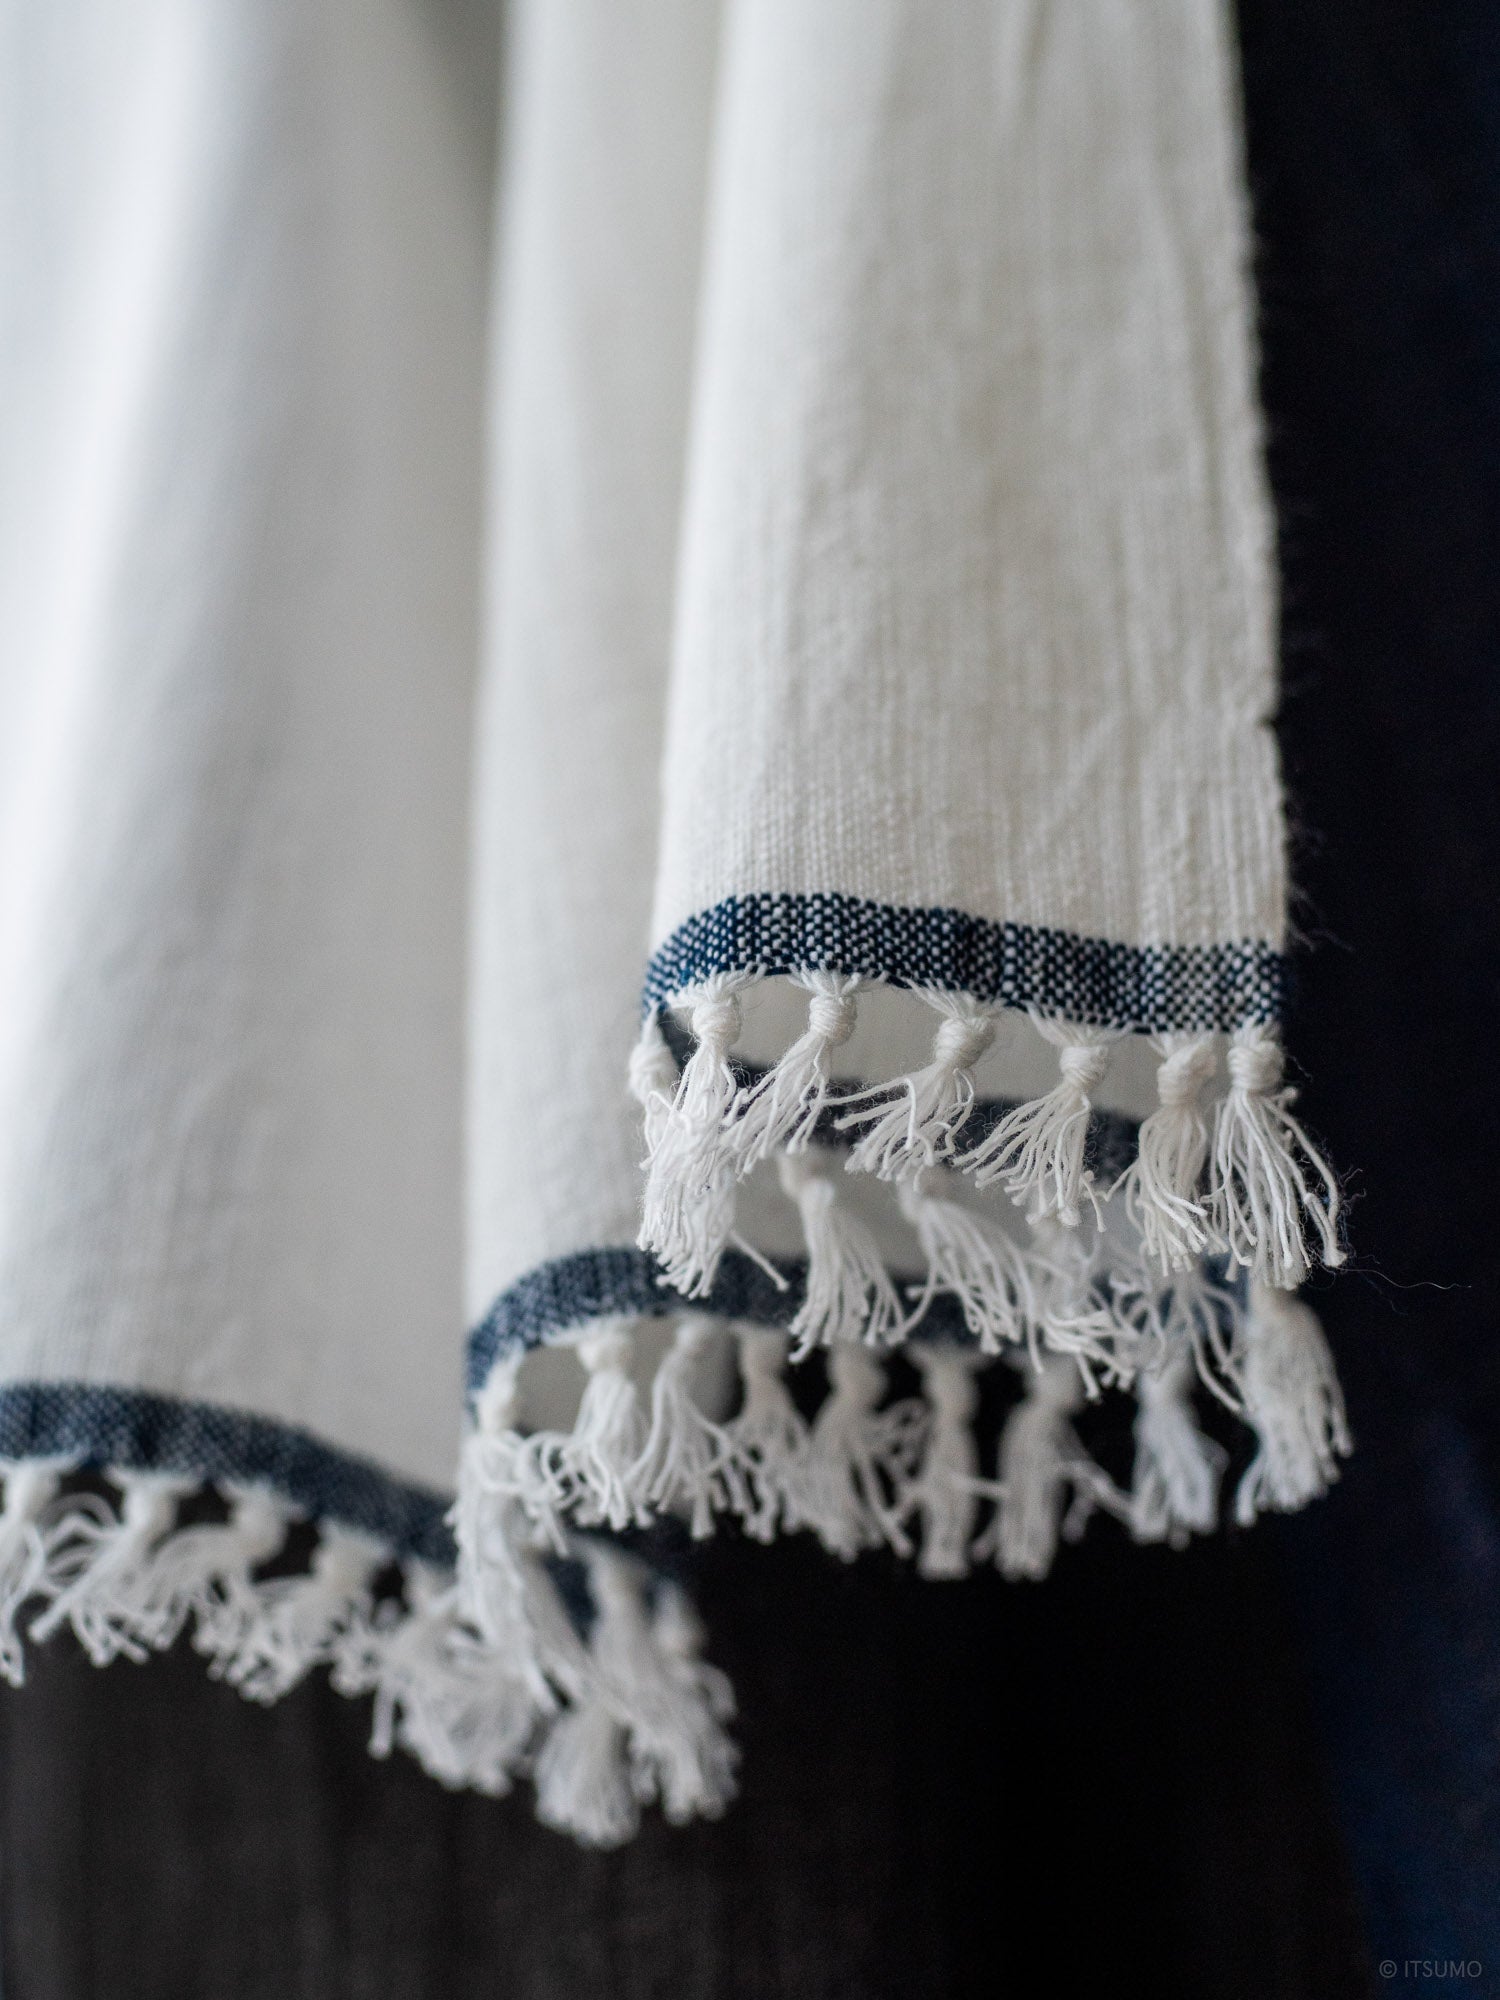 Khadi Cotton Face Towel – White